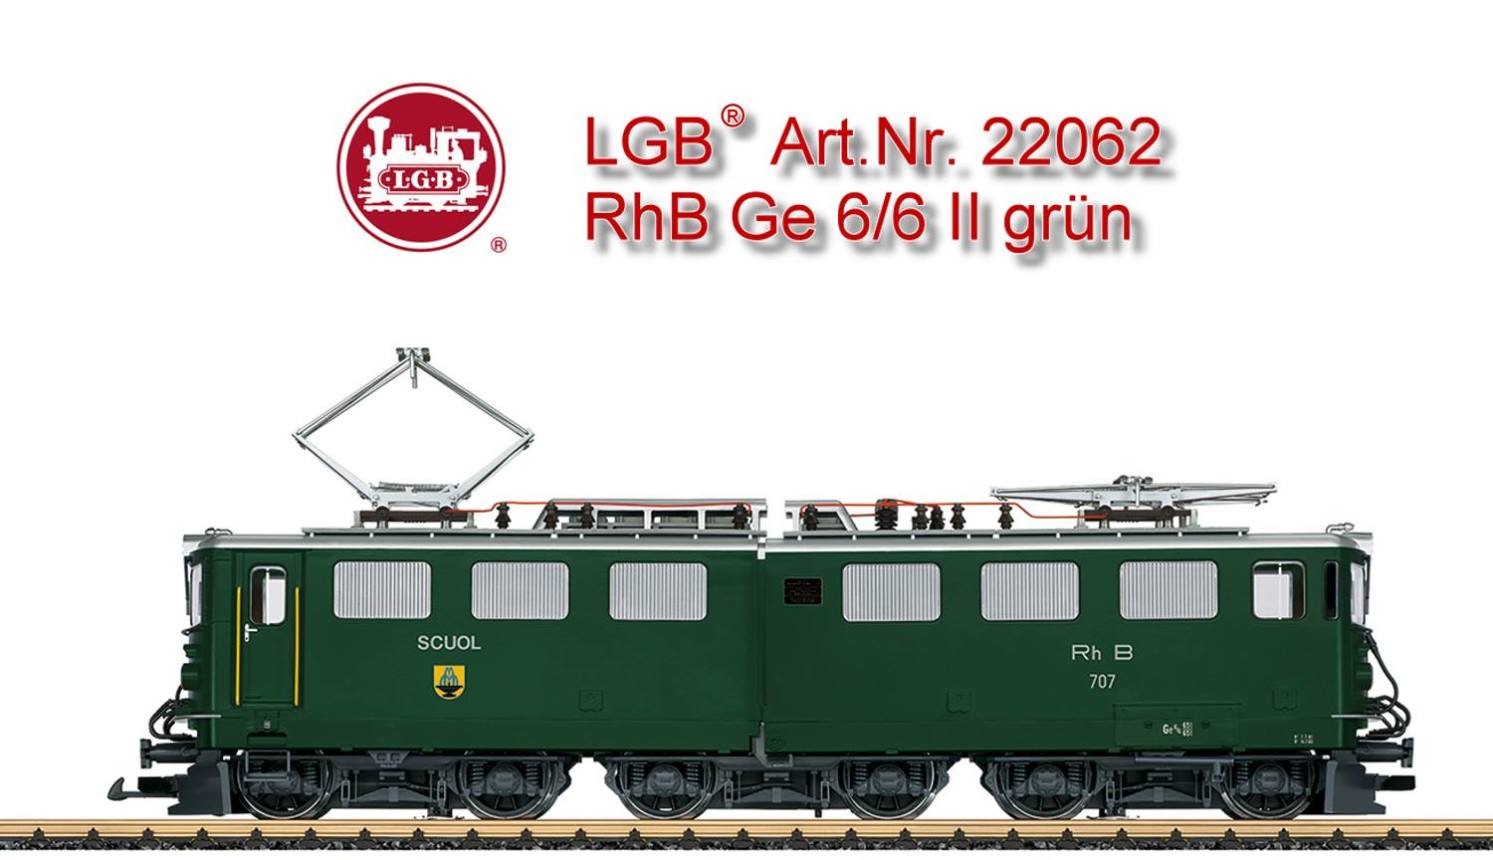 LGB Ge 6/6 II - grn - ARt. Nr. 22082 